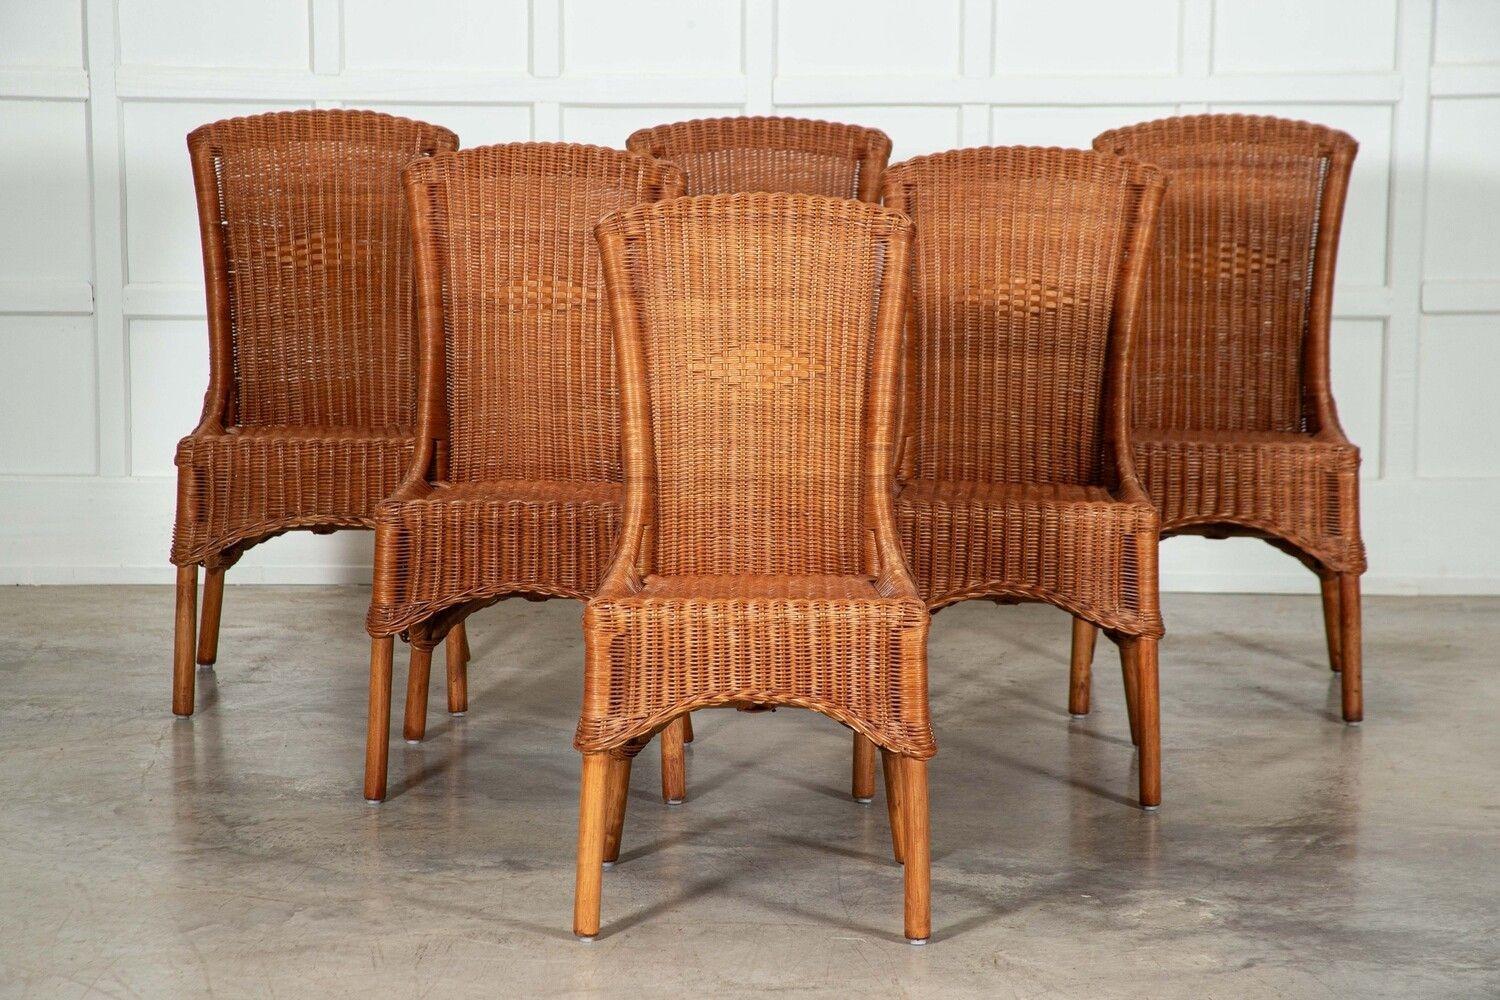 circa Mid20thC
Set Mid 20thC English Wicker Dining Chairs
Set of 6
sku 1645
W46 x D43 x H96 cm